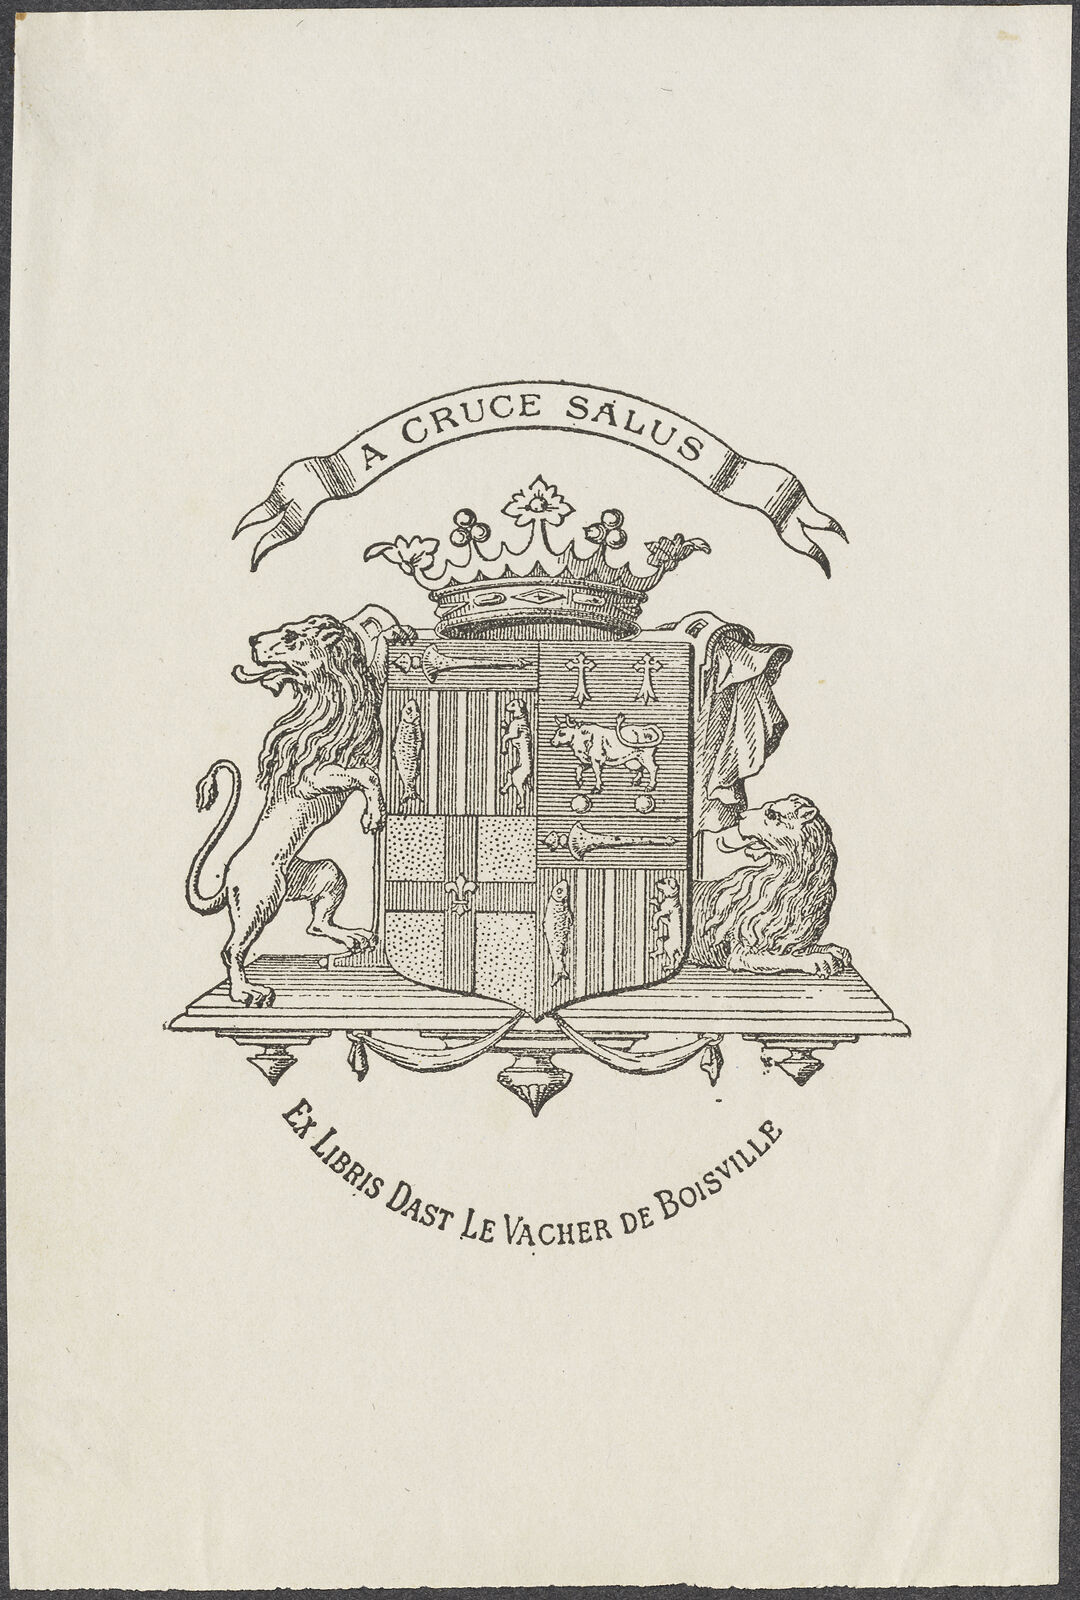 Le Vacher de Boisville, Dast | Digital Collections at the University of ...